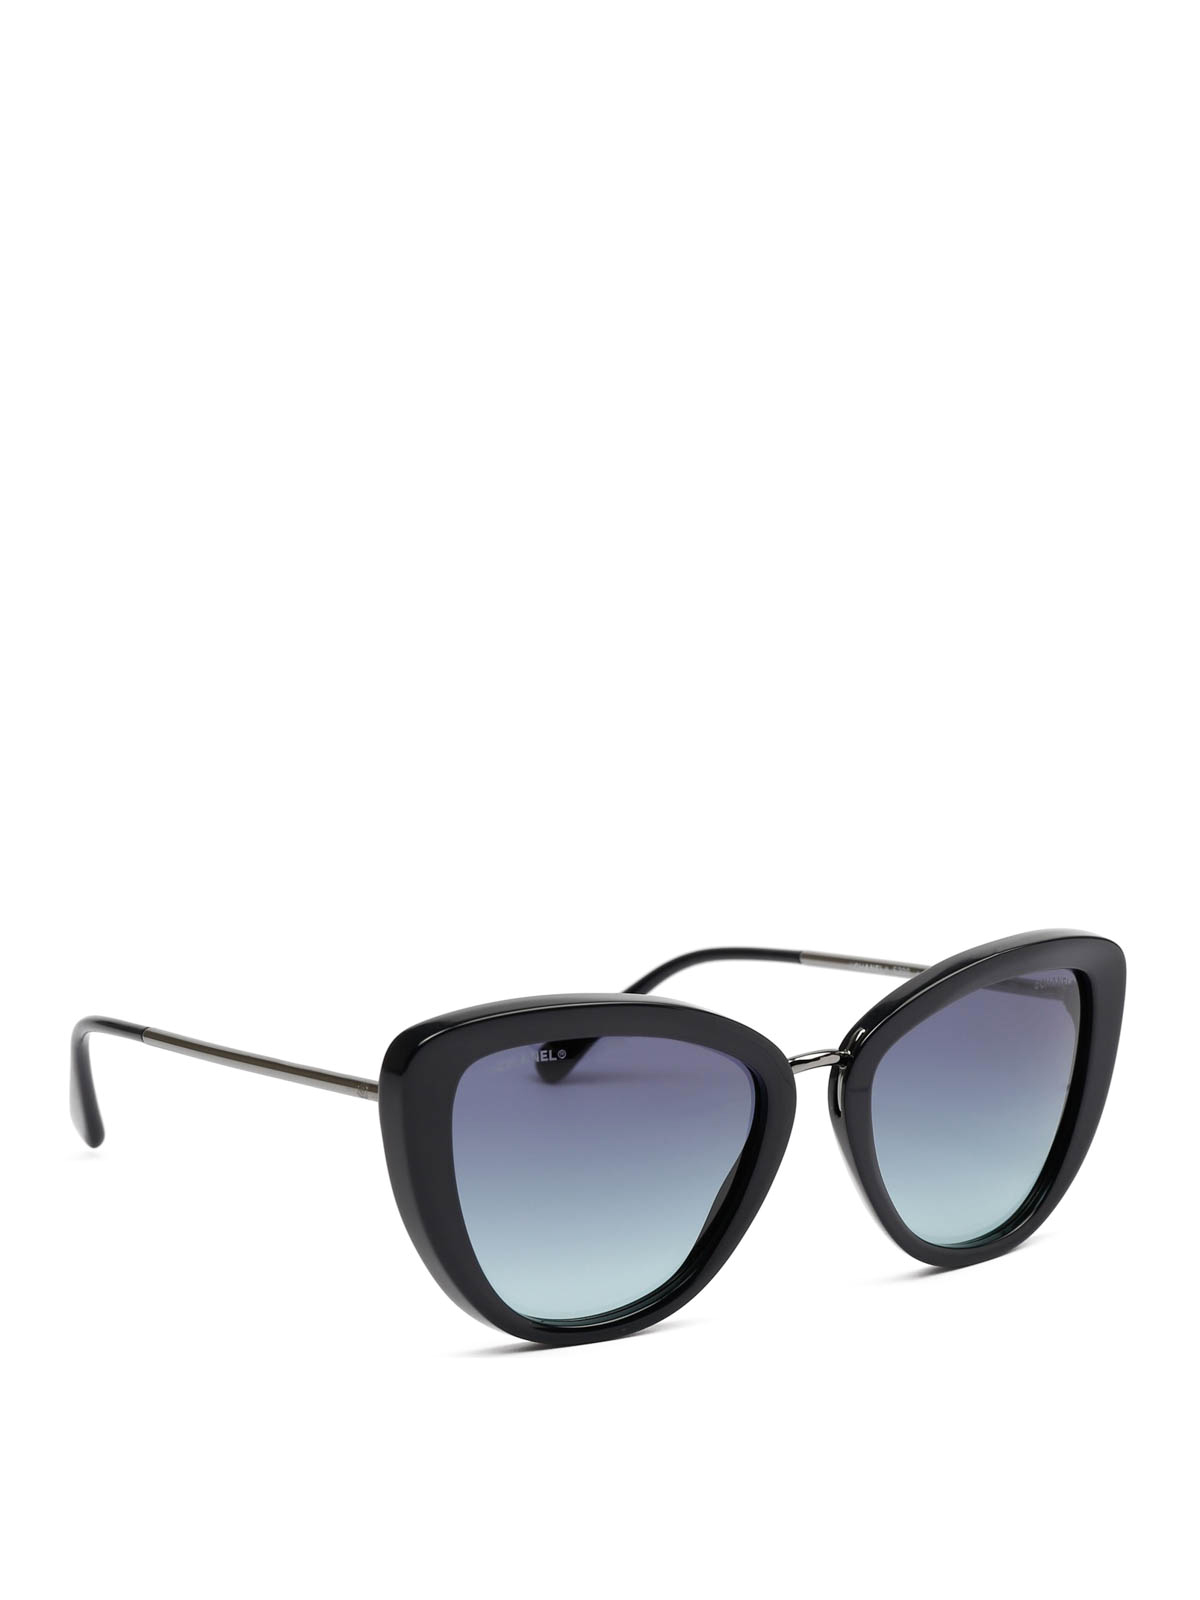 Sunglasses Pilot Sunglasses acetate  Fashion  CHANEL